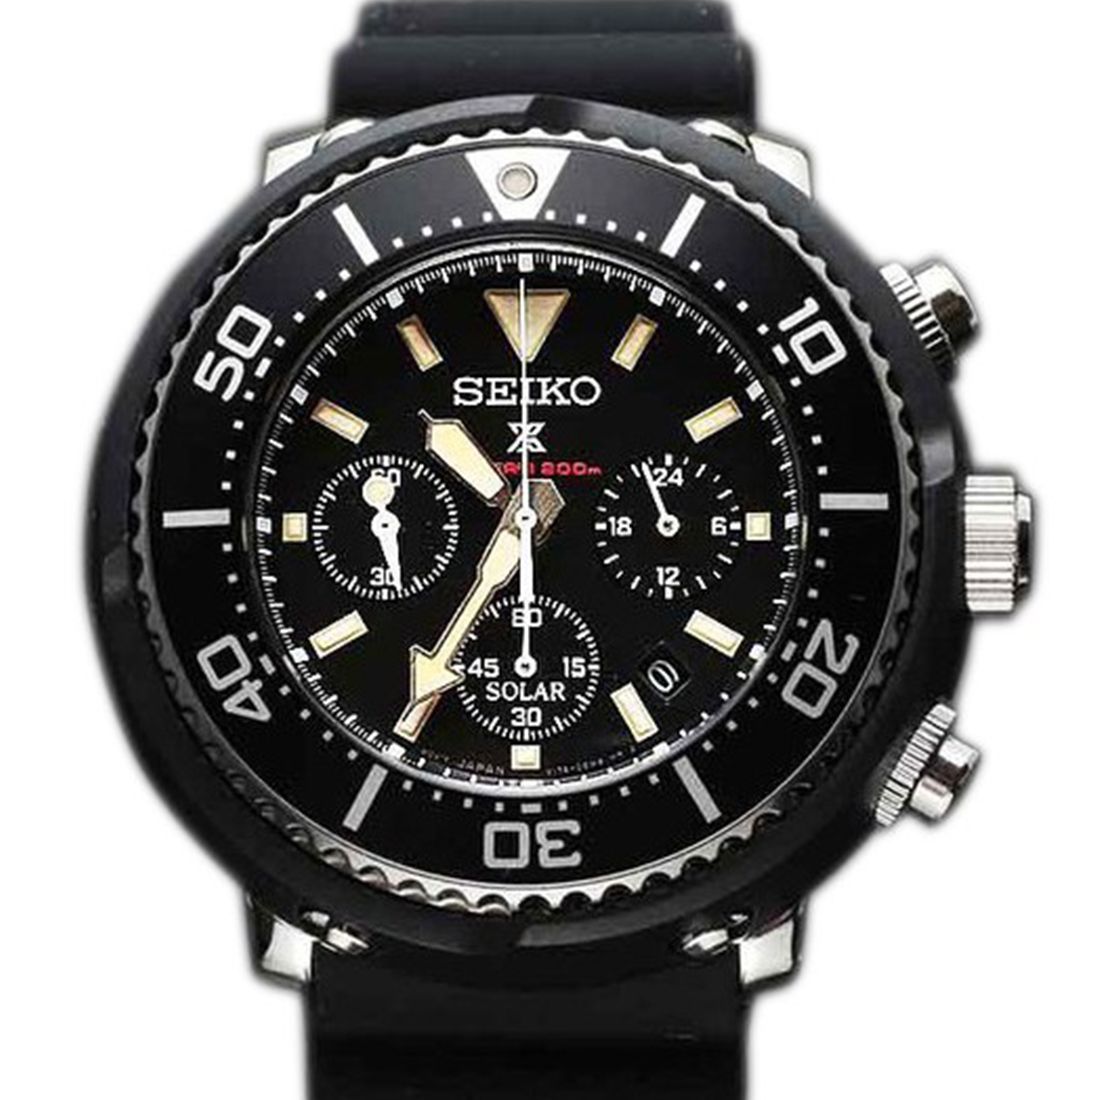 Seiko Prospex Solar Divers JDM Watch SBDL041 (BACKORDER) -Seiko